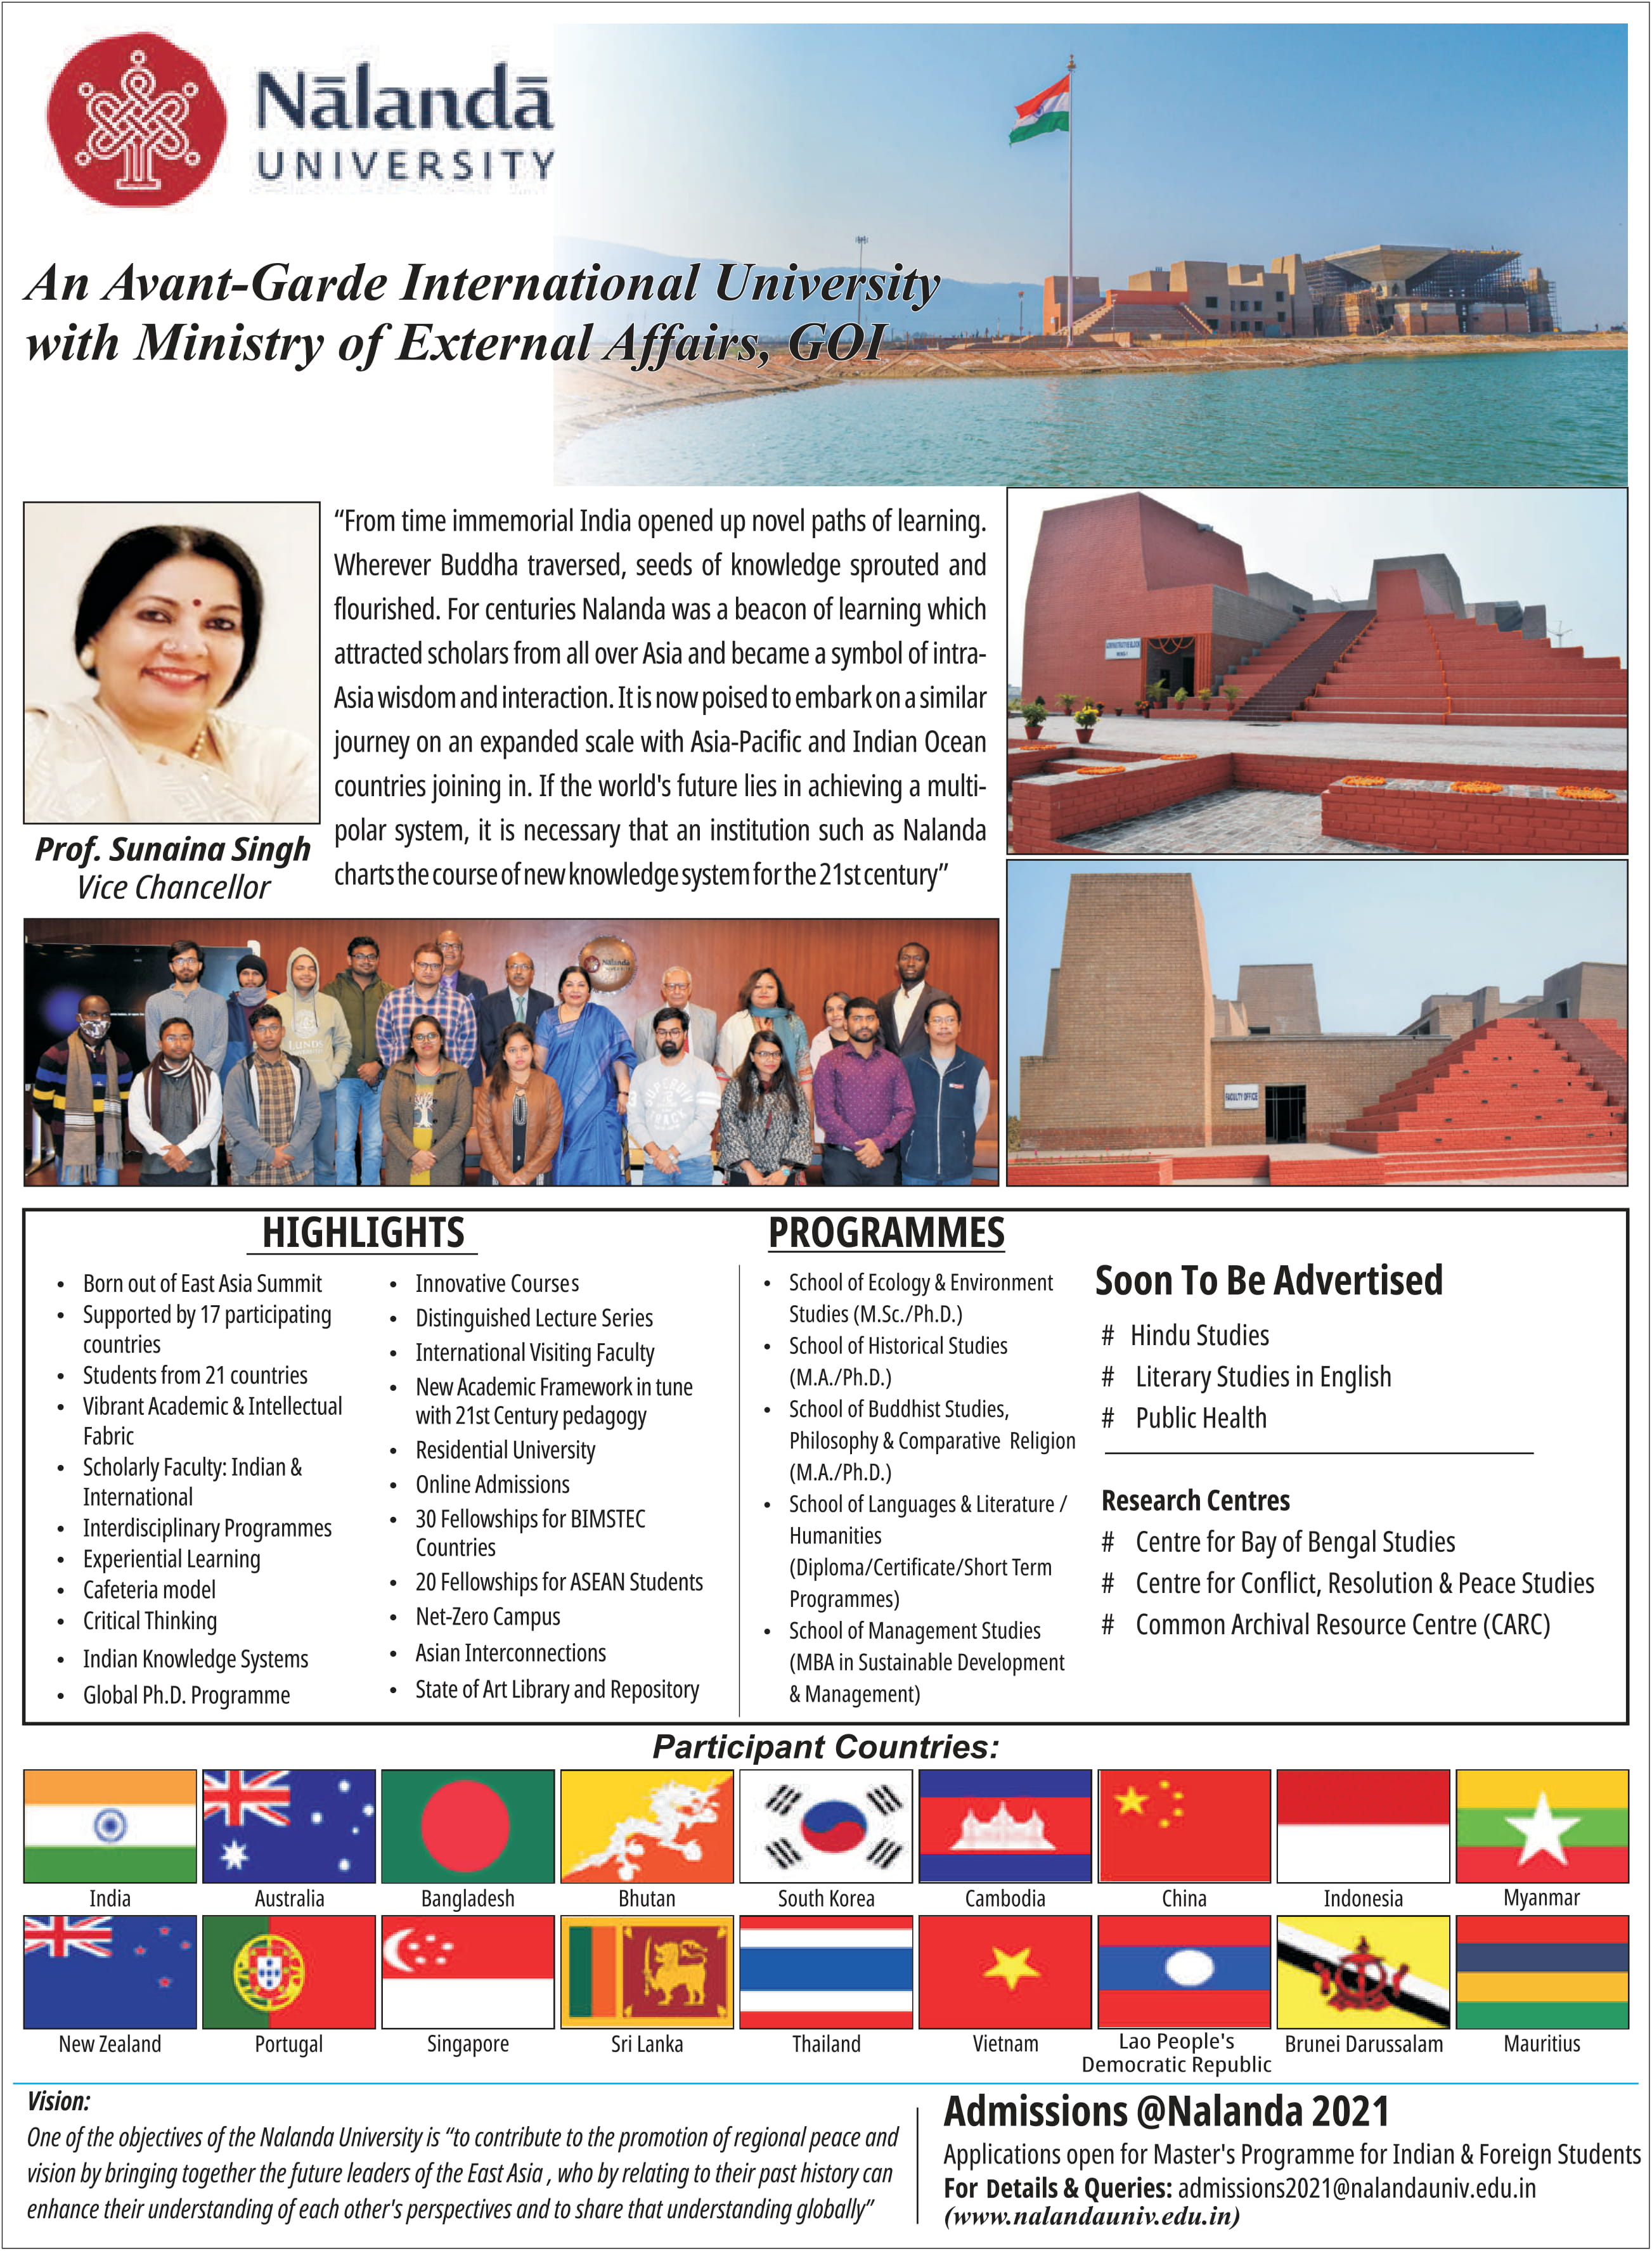 "Nalanda University Admissions Information 2021".